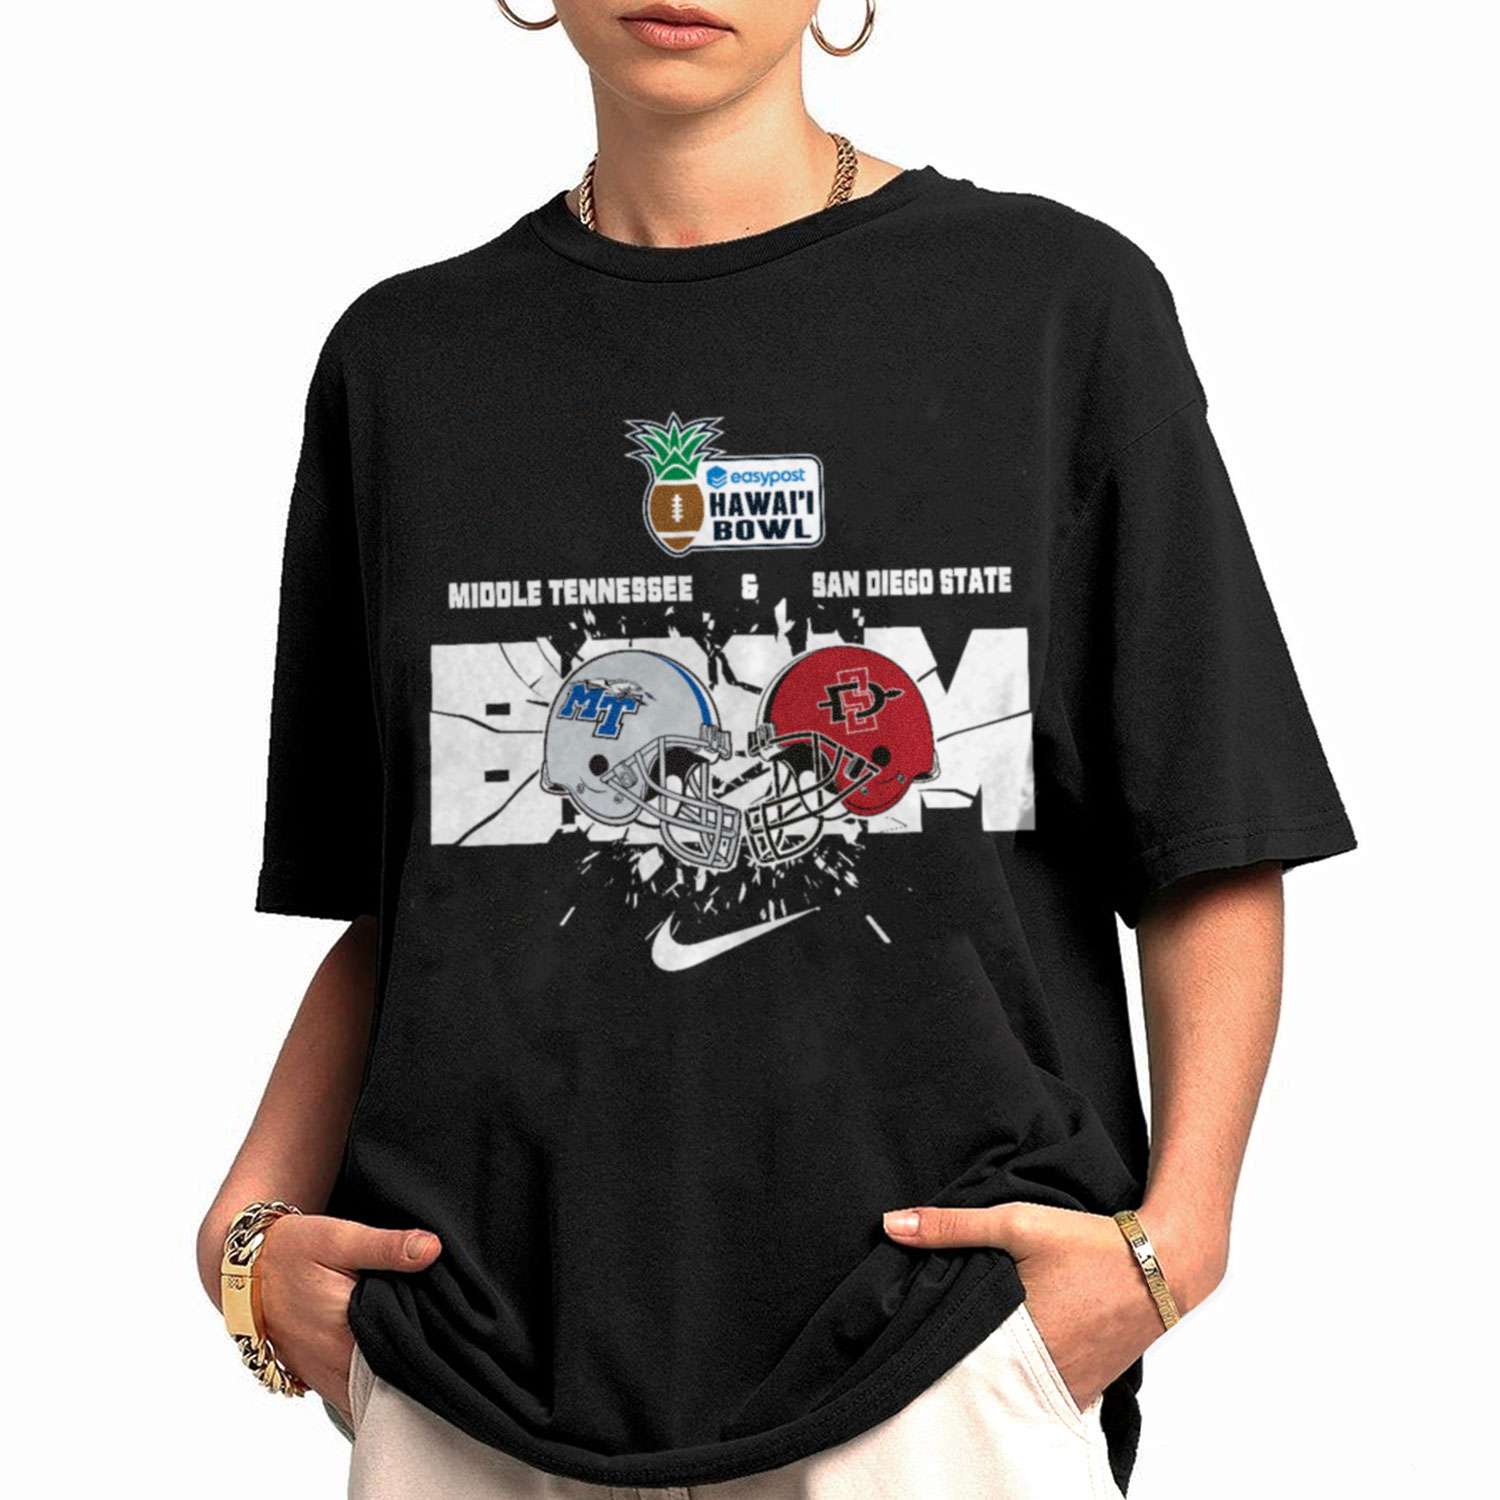 Middle Tennessee And San Diego State Hawai'i Boom Helmet Hawai'i Bowl Champions T-Shirt